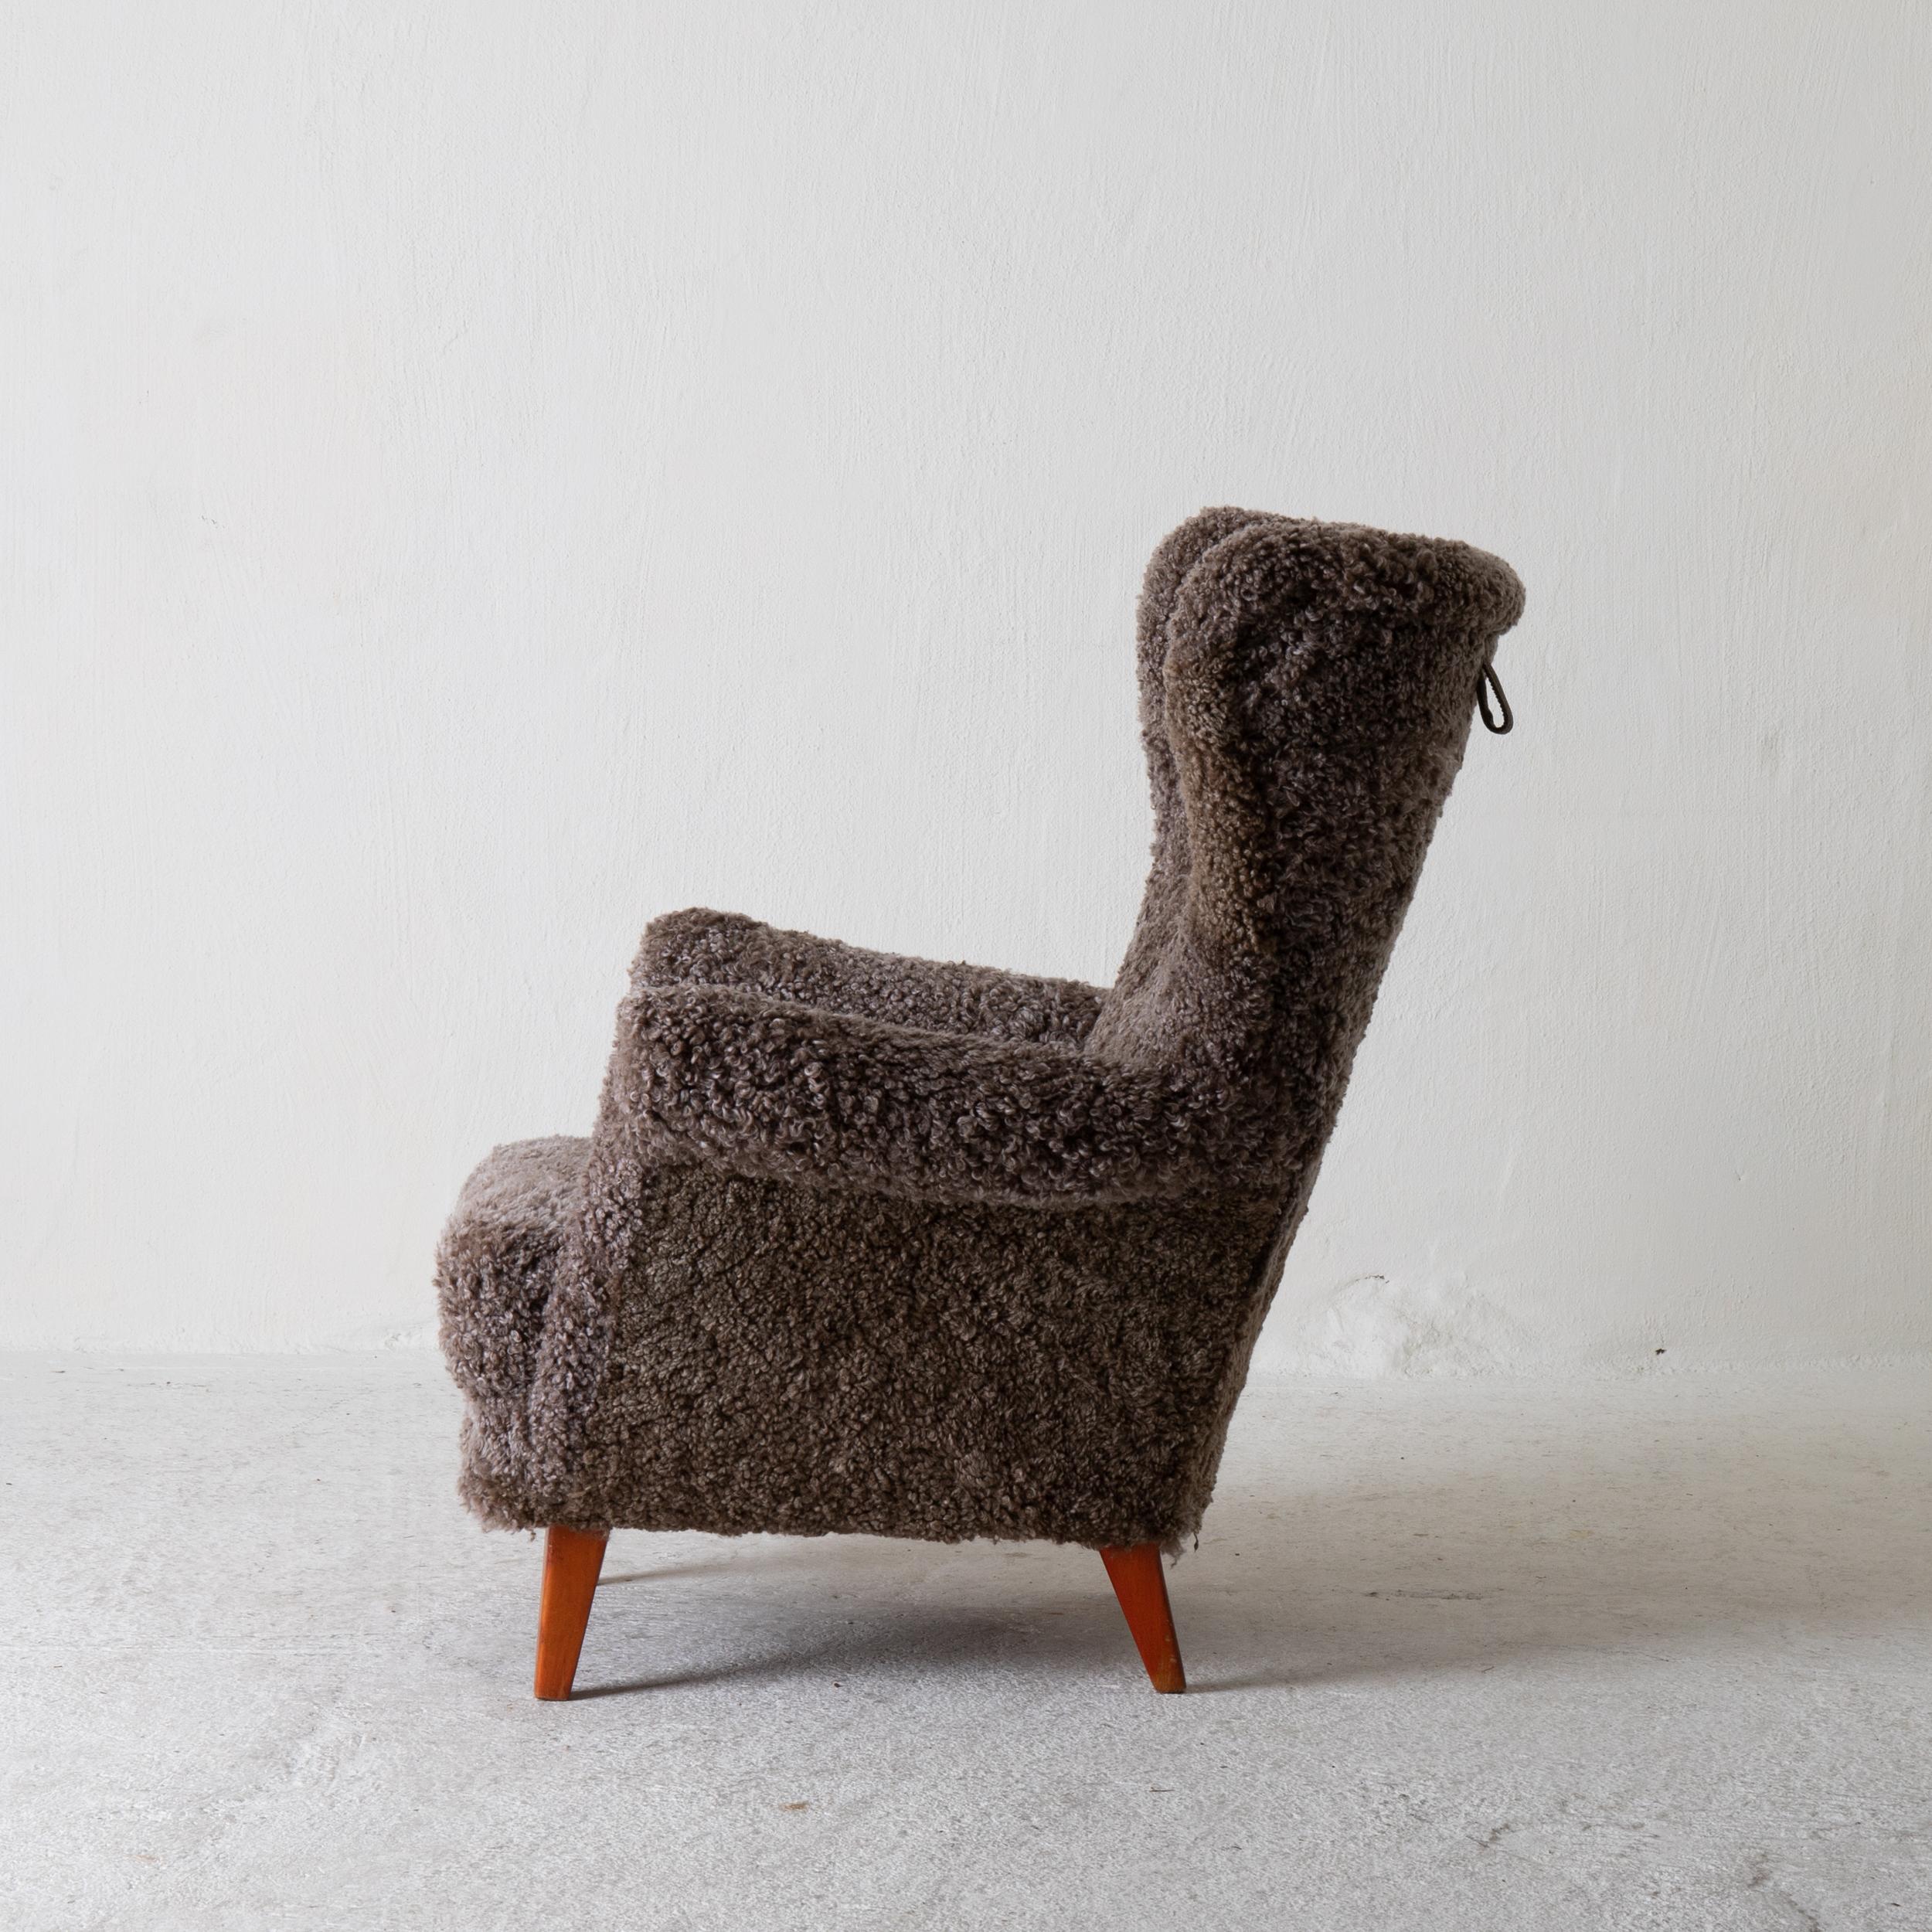 Chair lounge Swedish sheepskin grayish brown 20th century Sweden. An easy chair made during the 20th century in Sweden. Upholstered in a grayish-brown sheep skin.

  